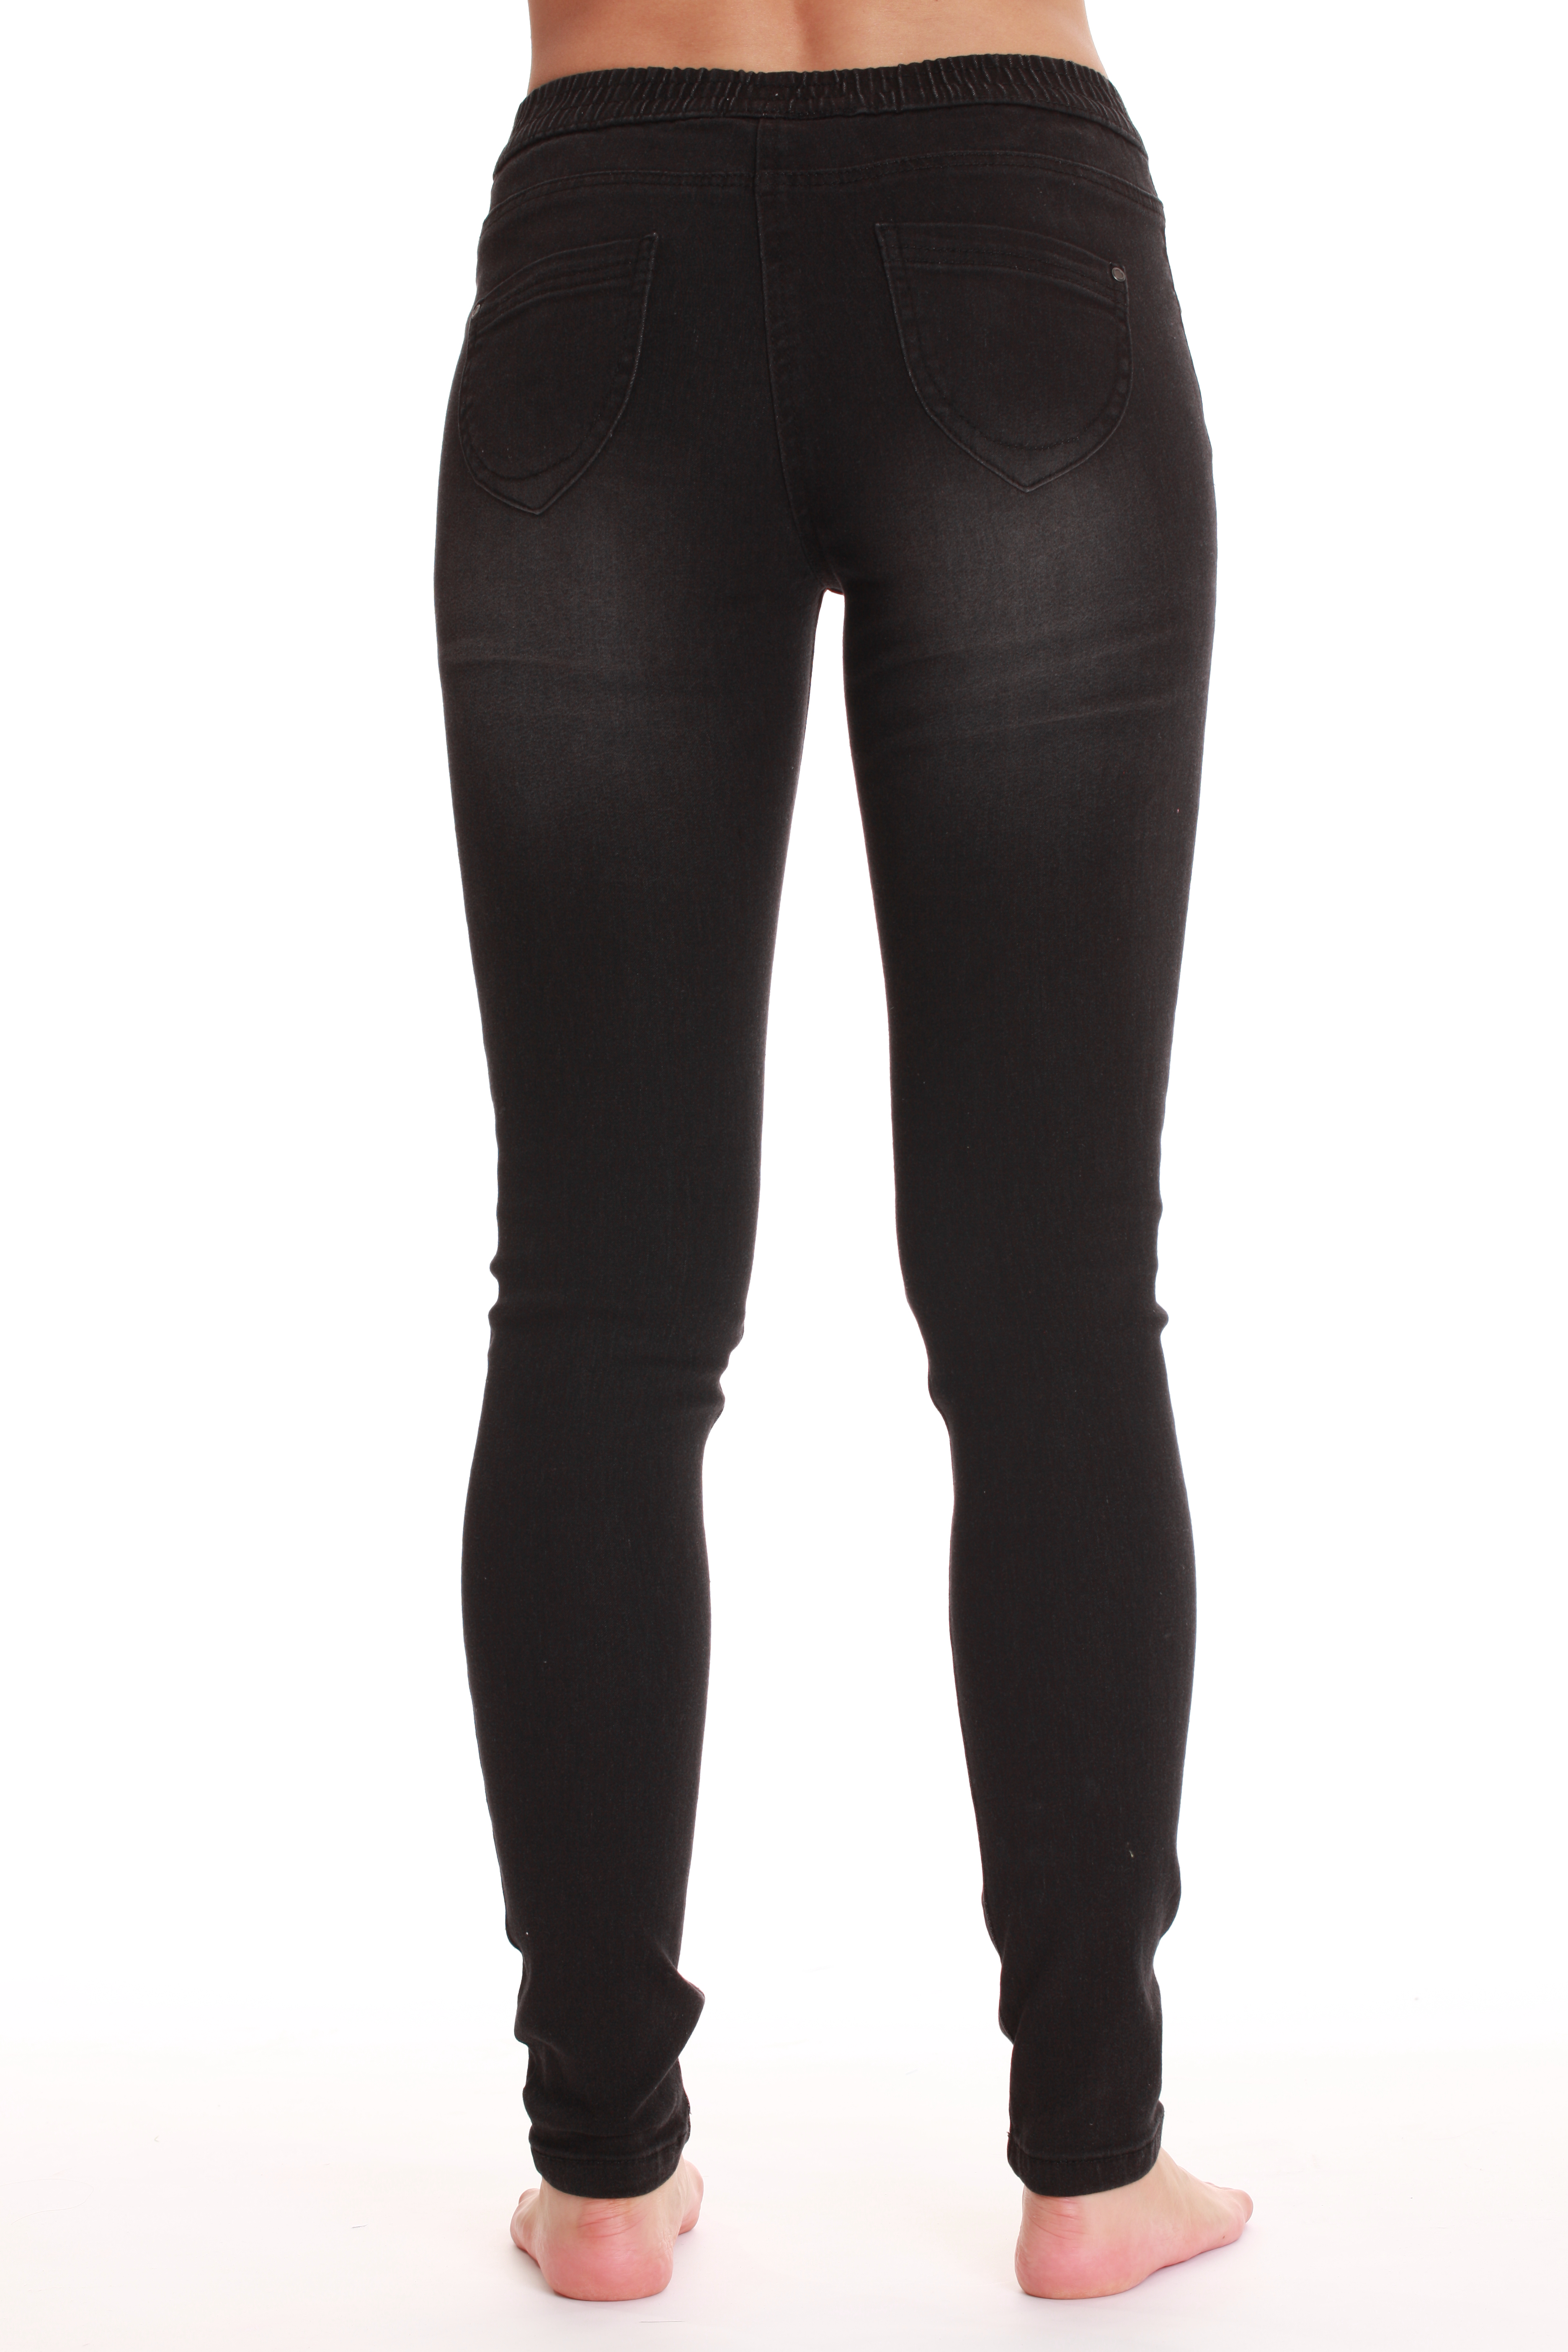 Just Love Women's Denim Jeggings with Pockets - Comfortable Stretch Jeans Leggings (Black Denim, Medium) - image 2 of 2